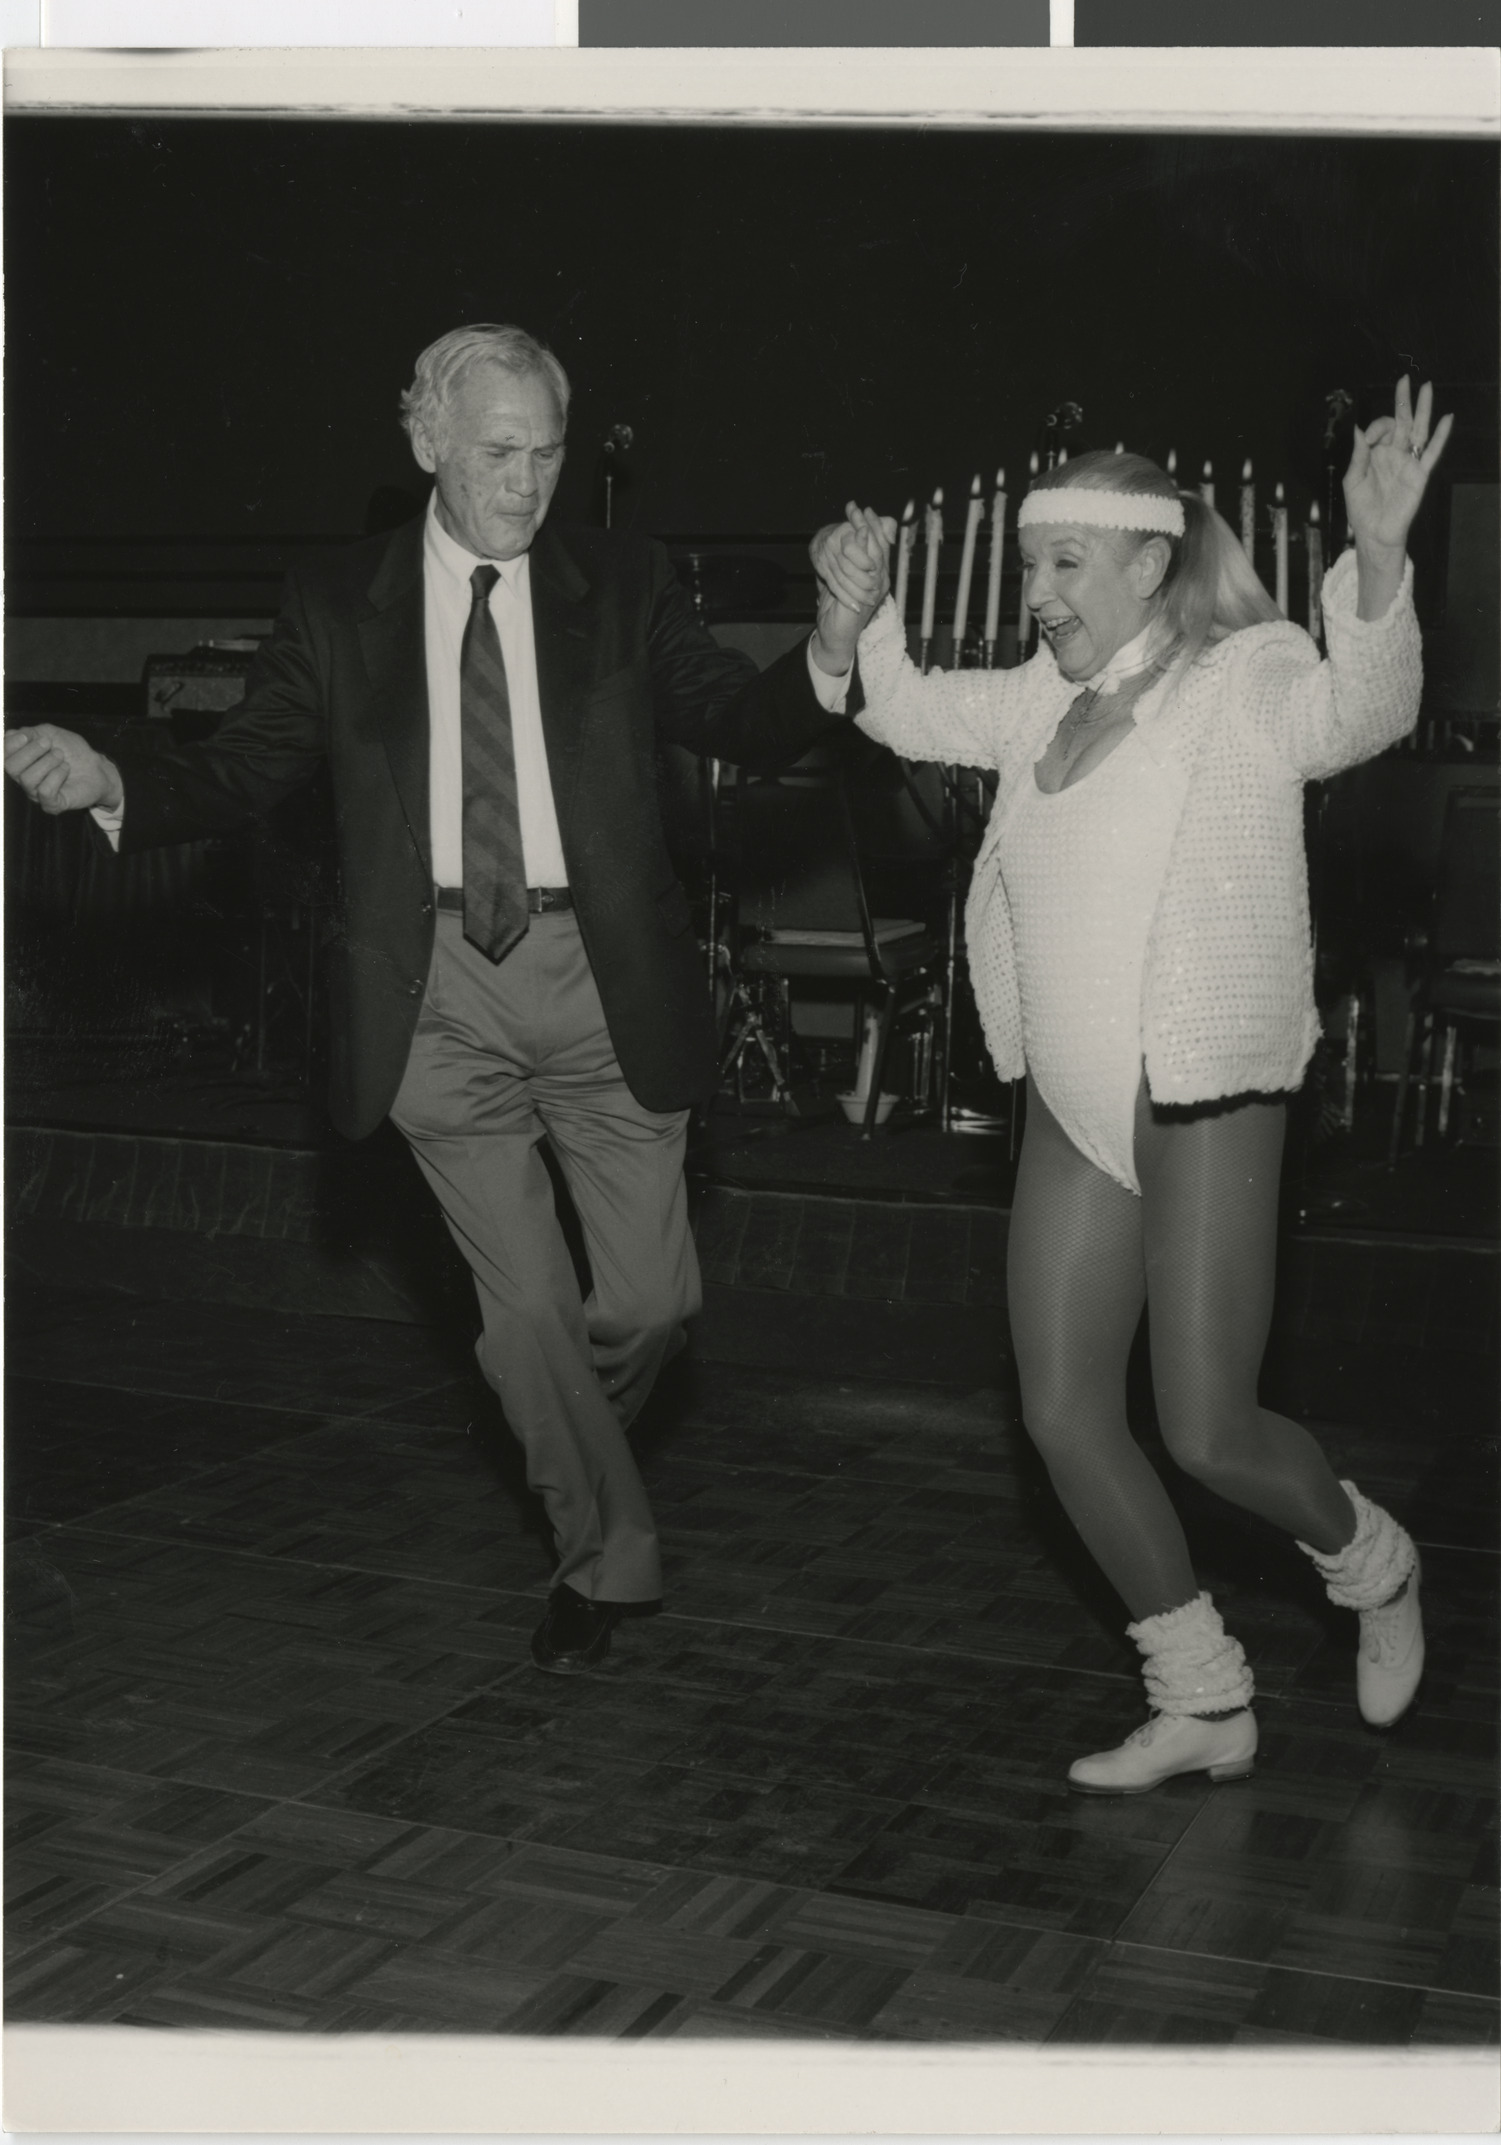 Photograph of Hank Greenspun dancing with Peggy Ryan, 1980s